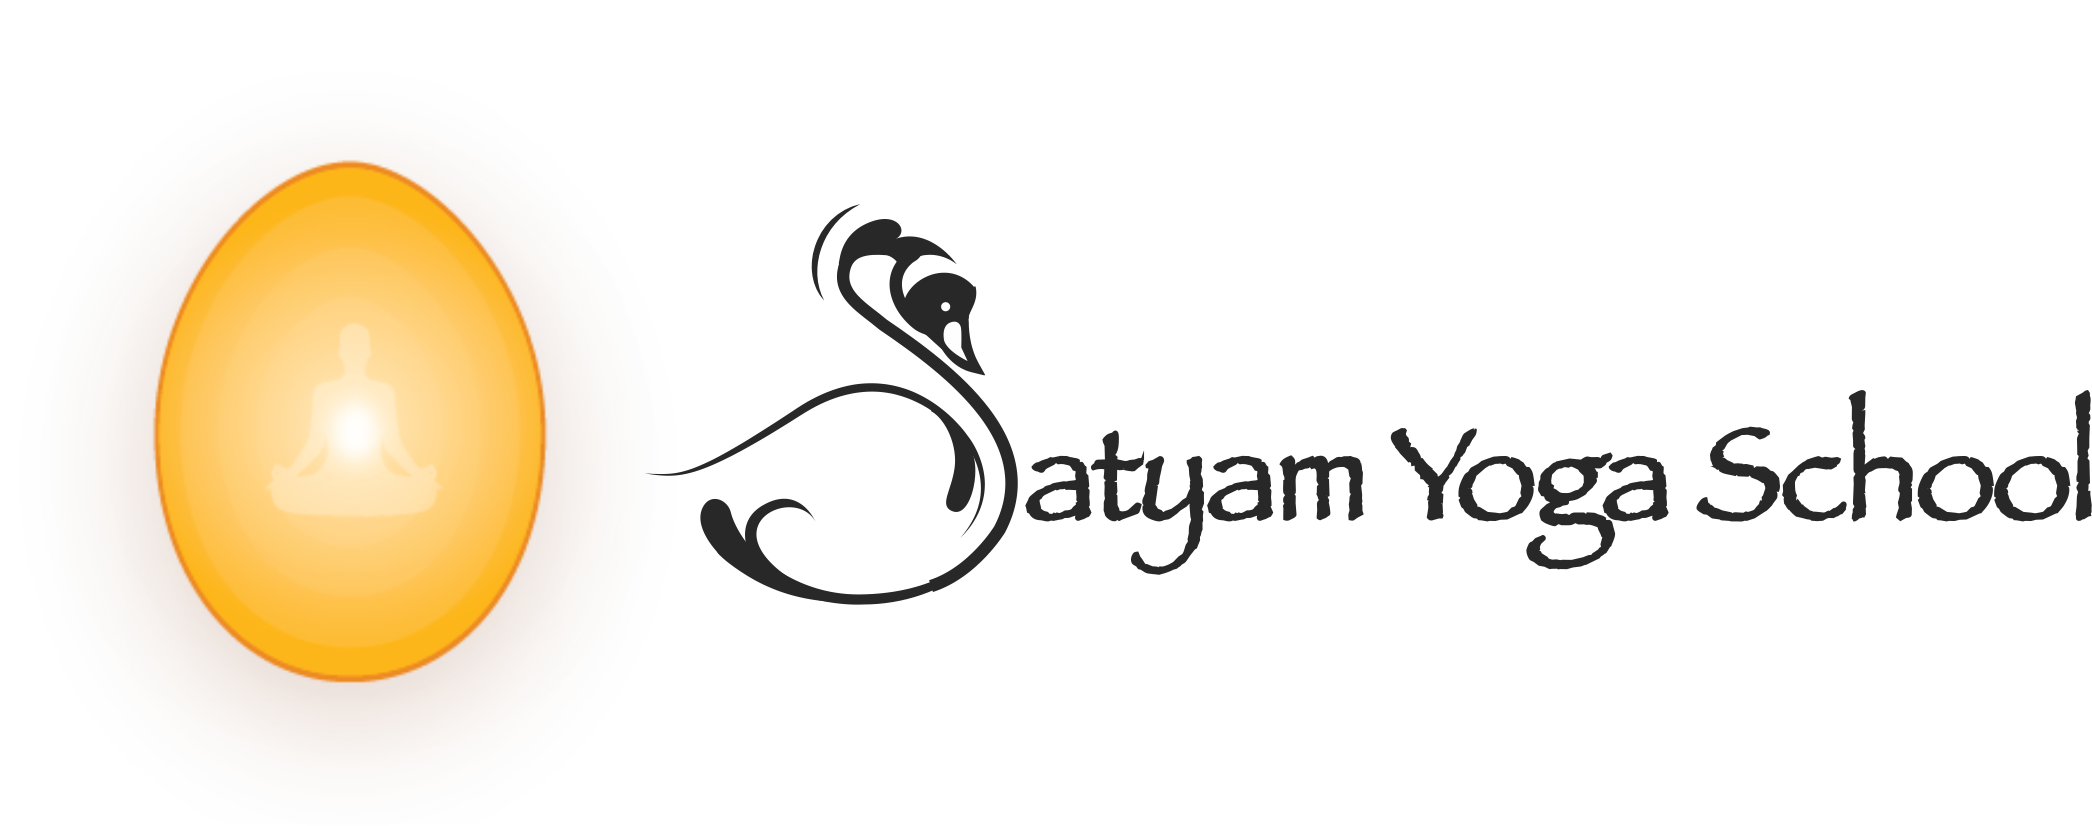 Satyam Yoga School